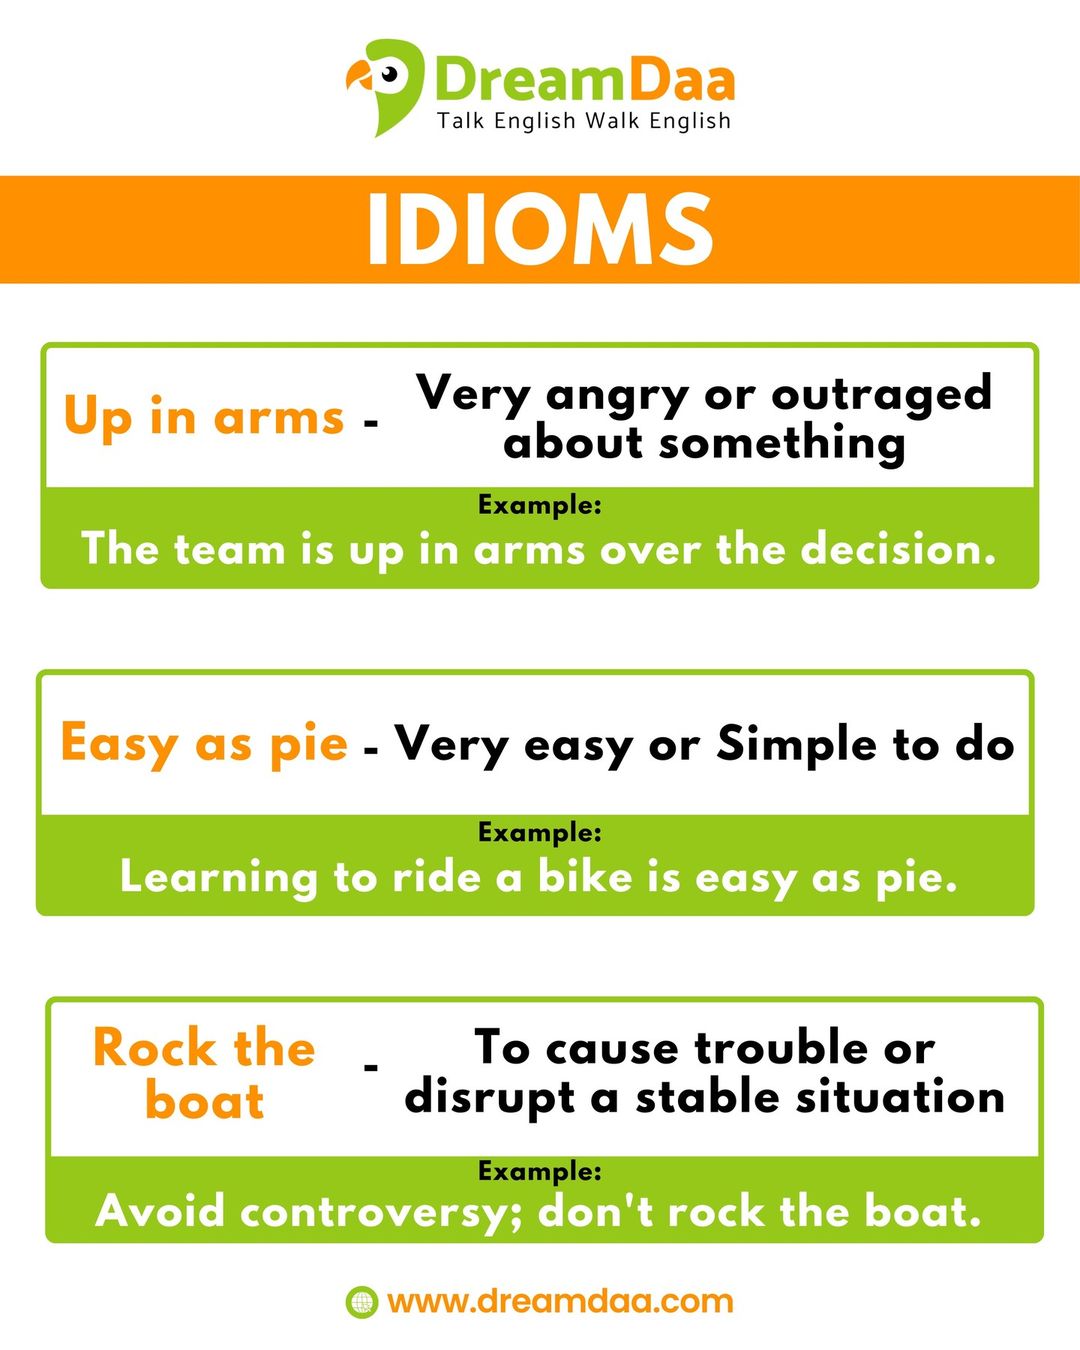 Level up your English with dreamdaa. 
Idioms
DreamDaa - English Learning
#e...